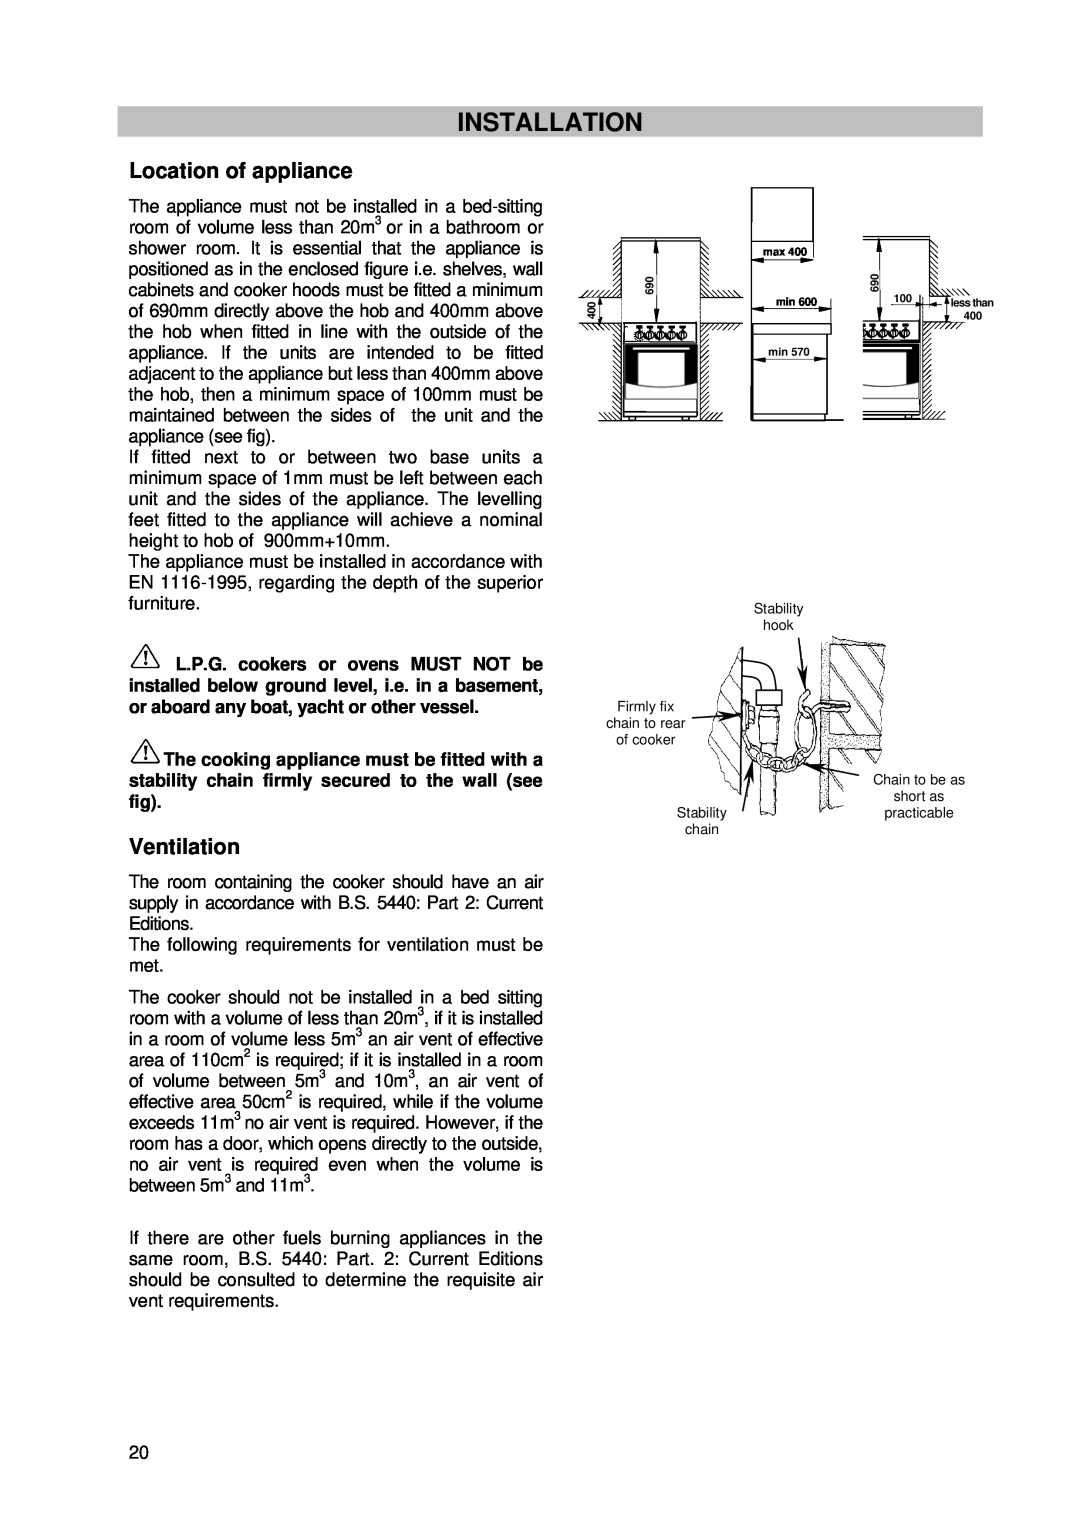 Tricity Bendix SG 205WL manual Installation, Location of appliance, Ventilation 